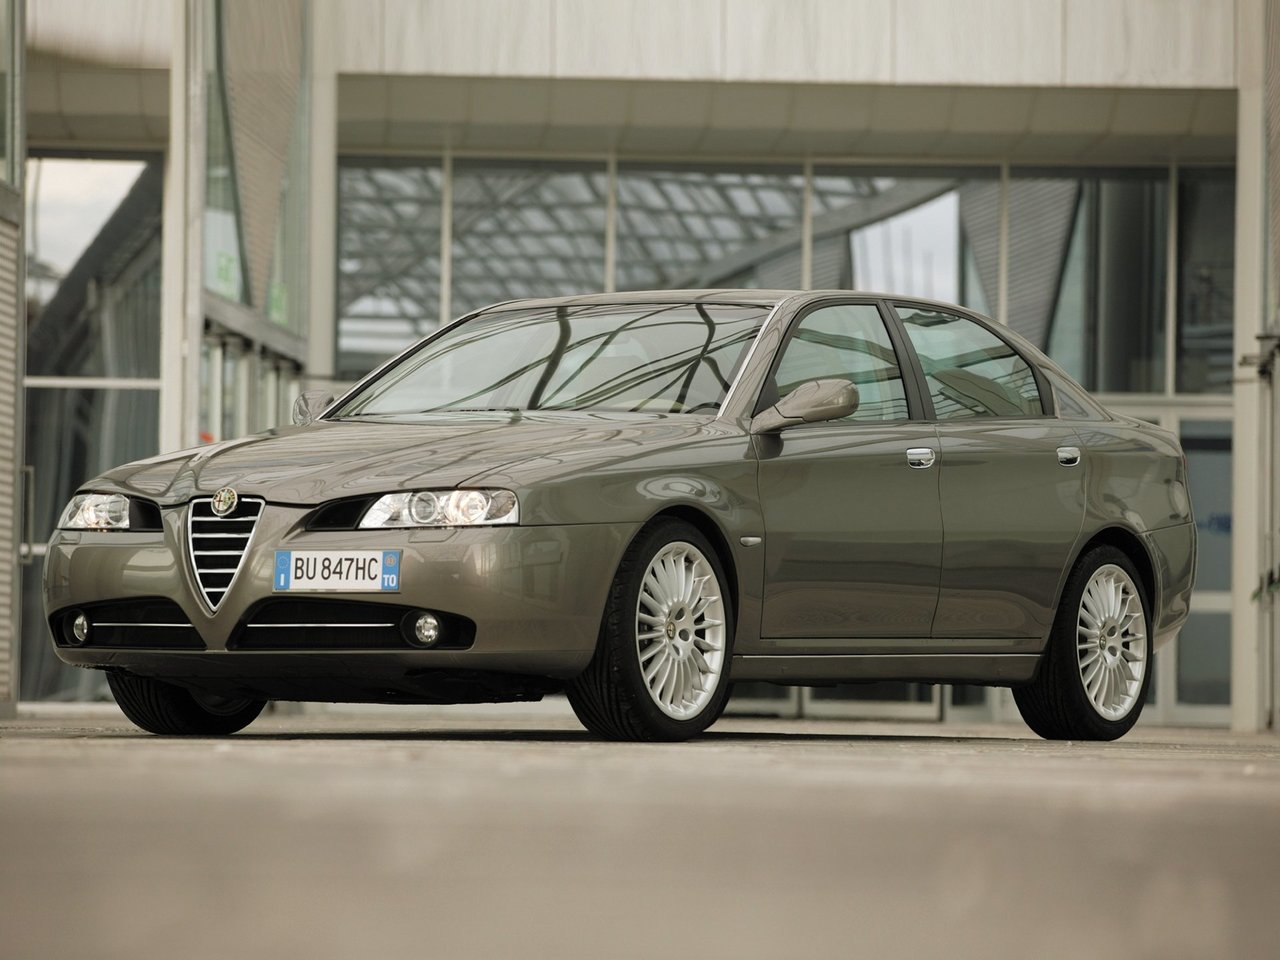 Расход газа четырёх комплектаций седана Alfa Romeo 166. Разница стоимости заправки газом и бензином. Автономный пробег до и после установки ГБО.